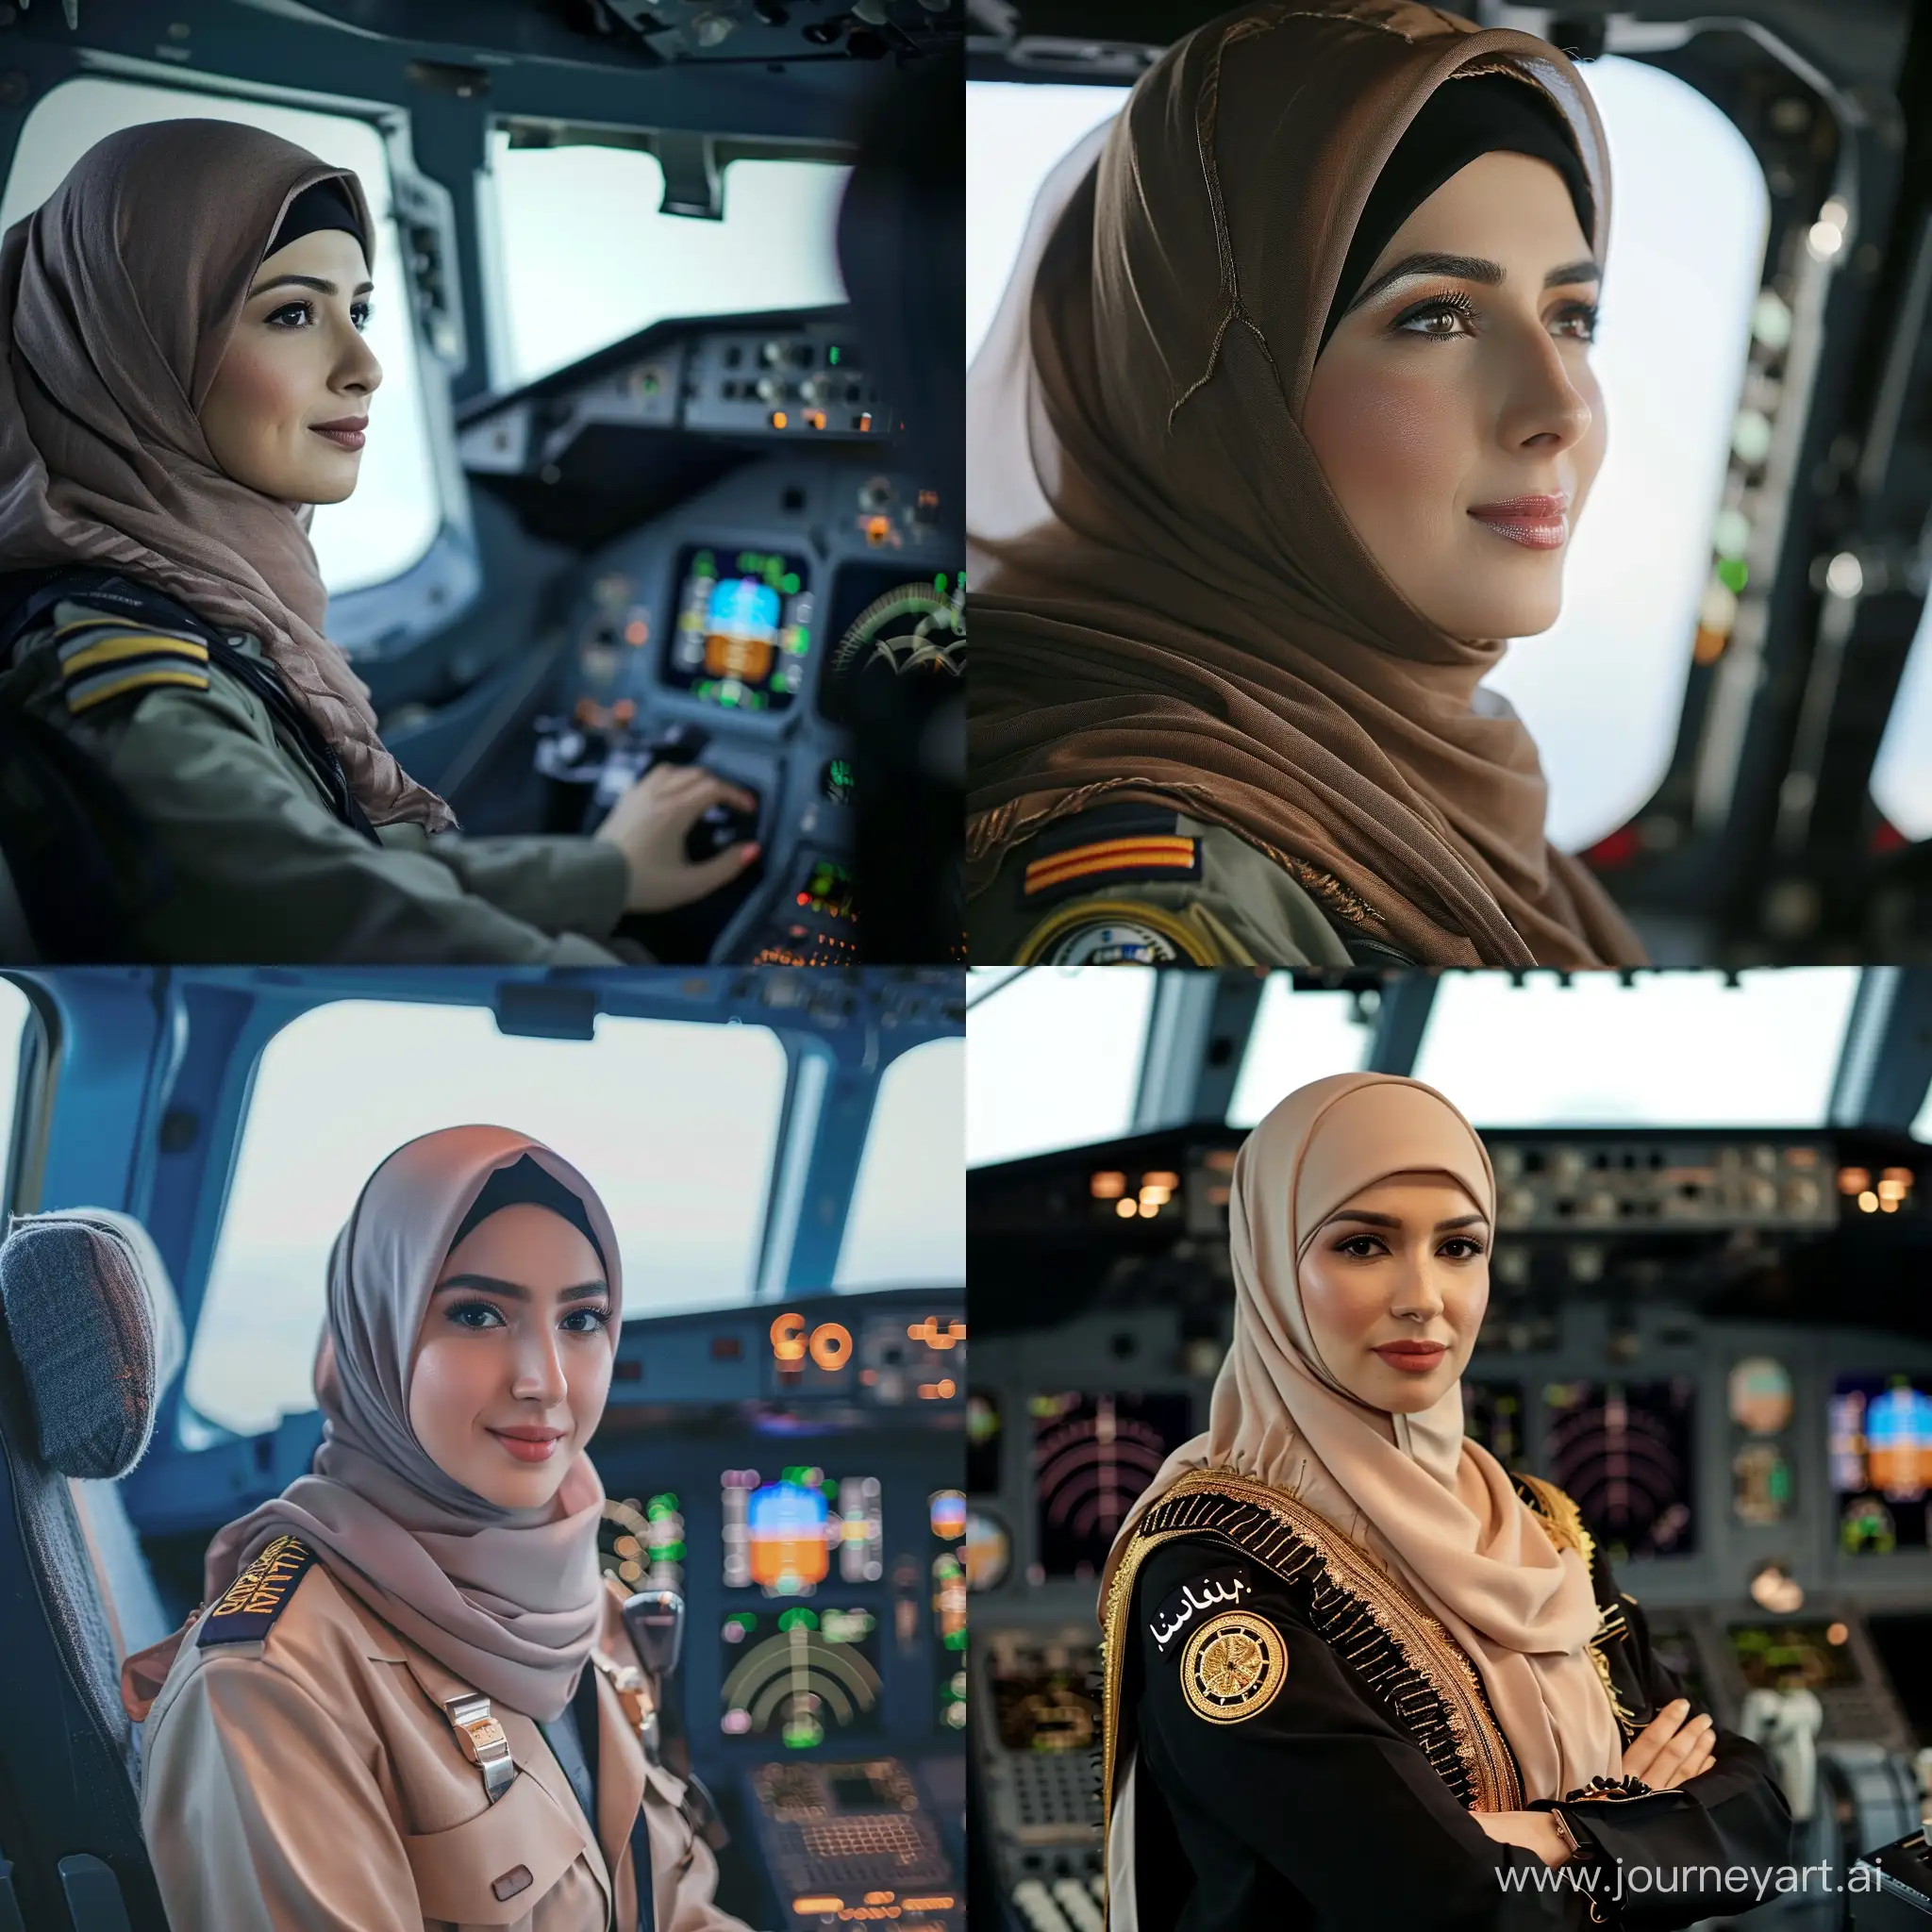 Muslim-Woman-Airplane-Pilot-in-Square-Frame